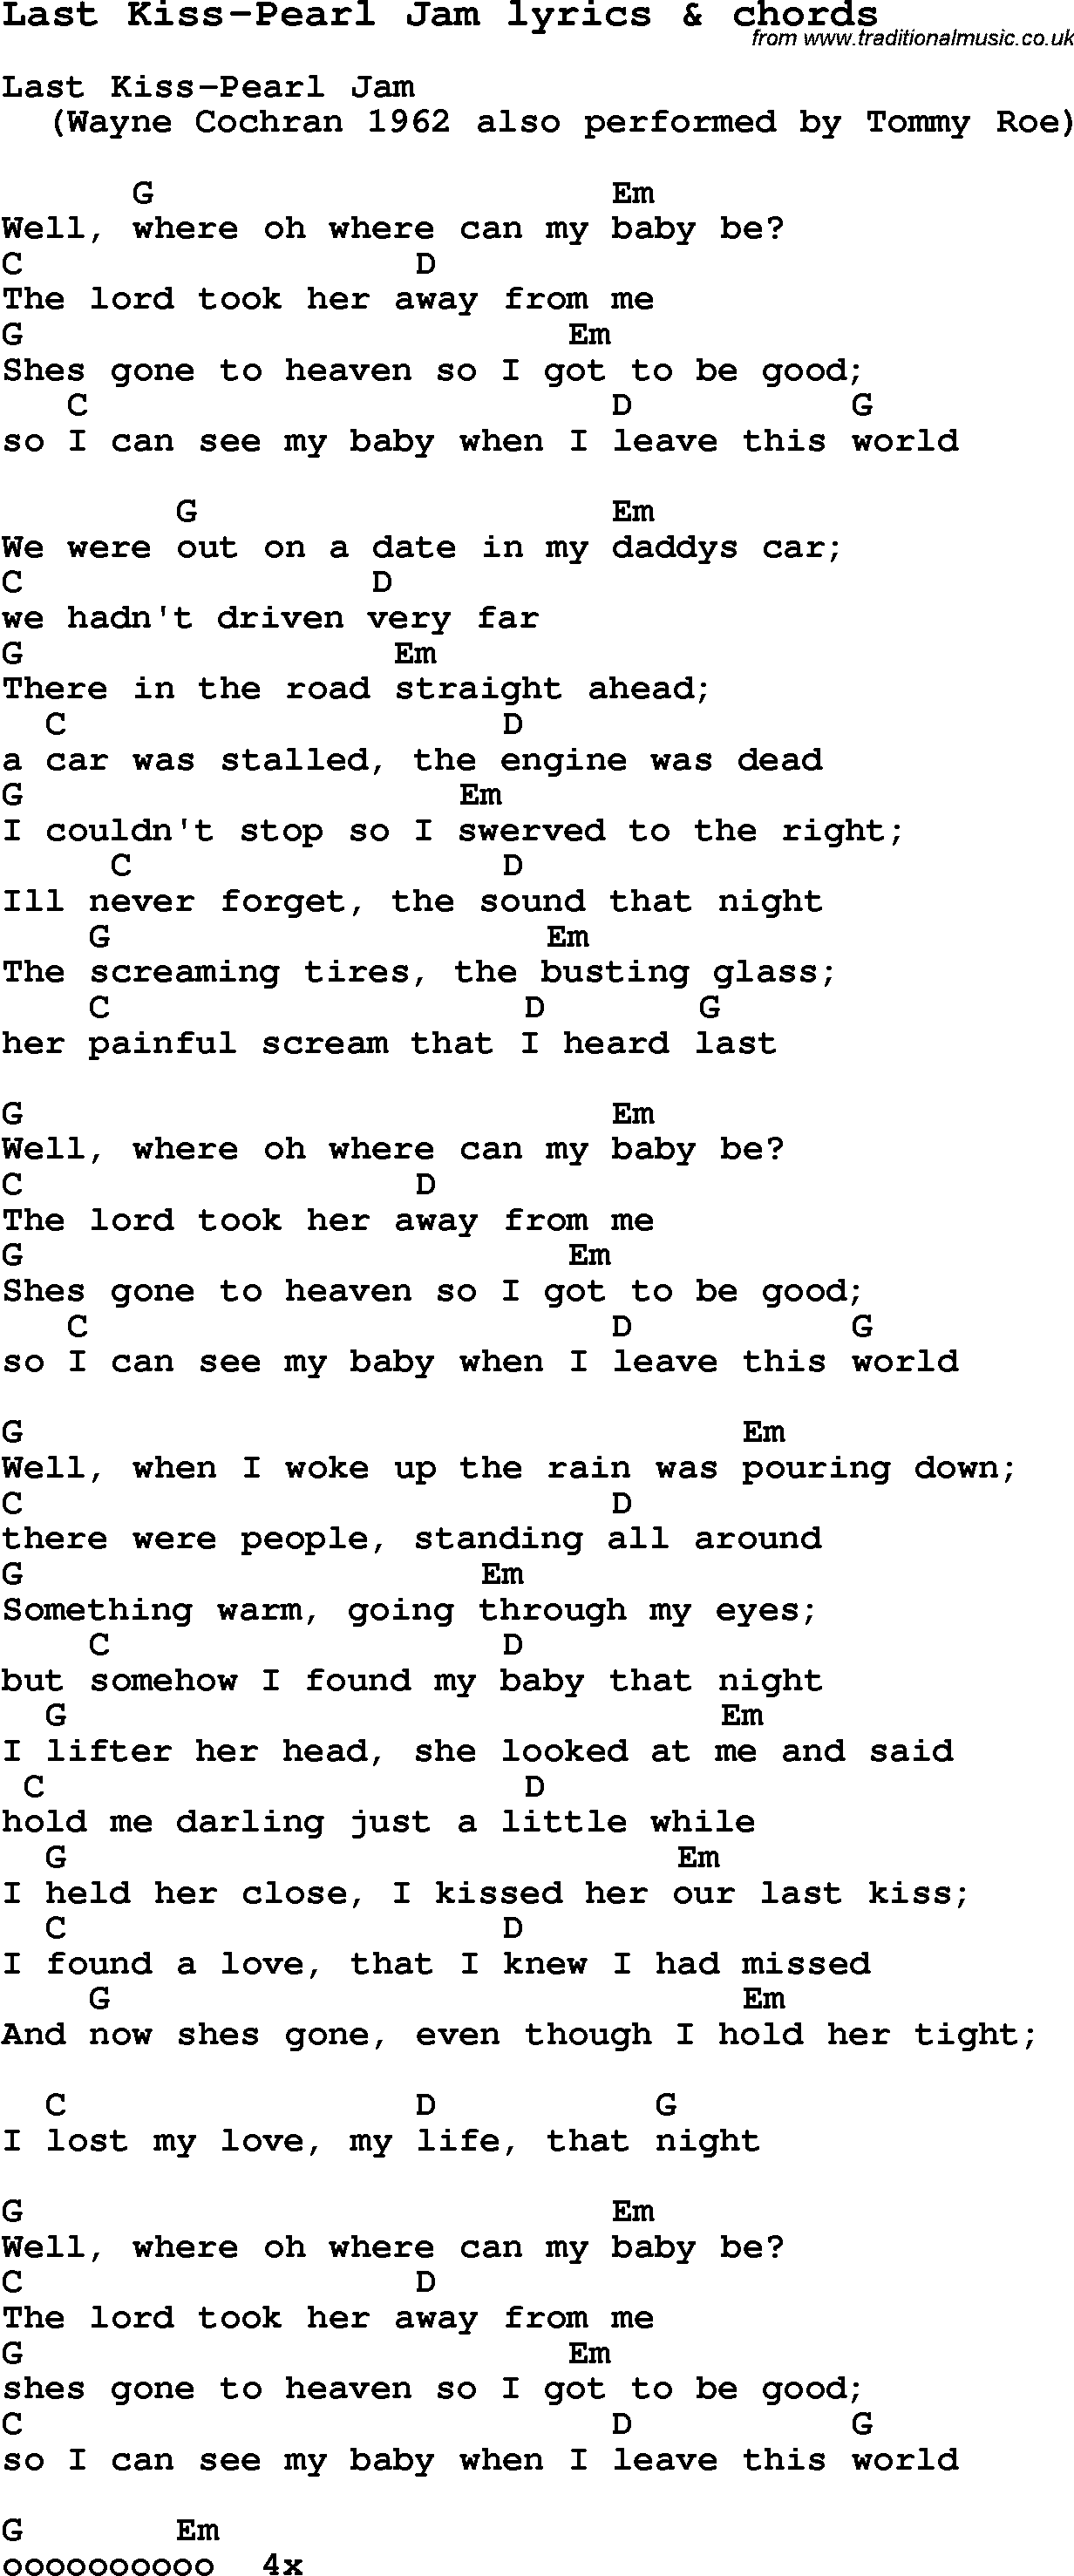 Love Song Lyrics for: Last Kiss-Pearl Jam with chords for Ukulele, Guitar Banjo etc.